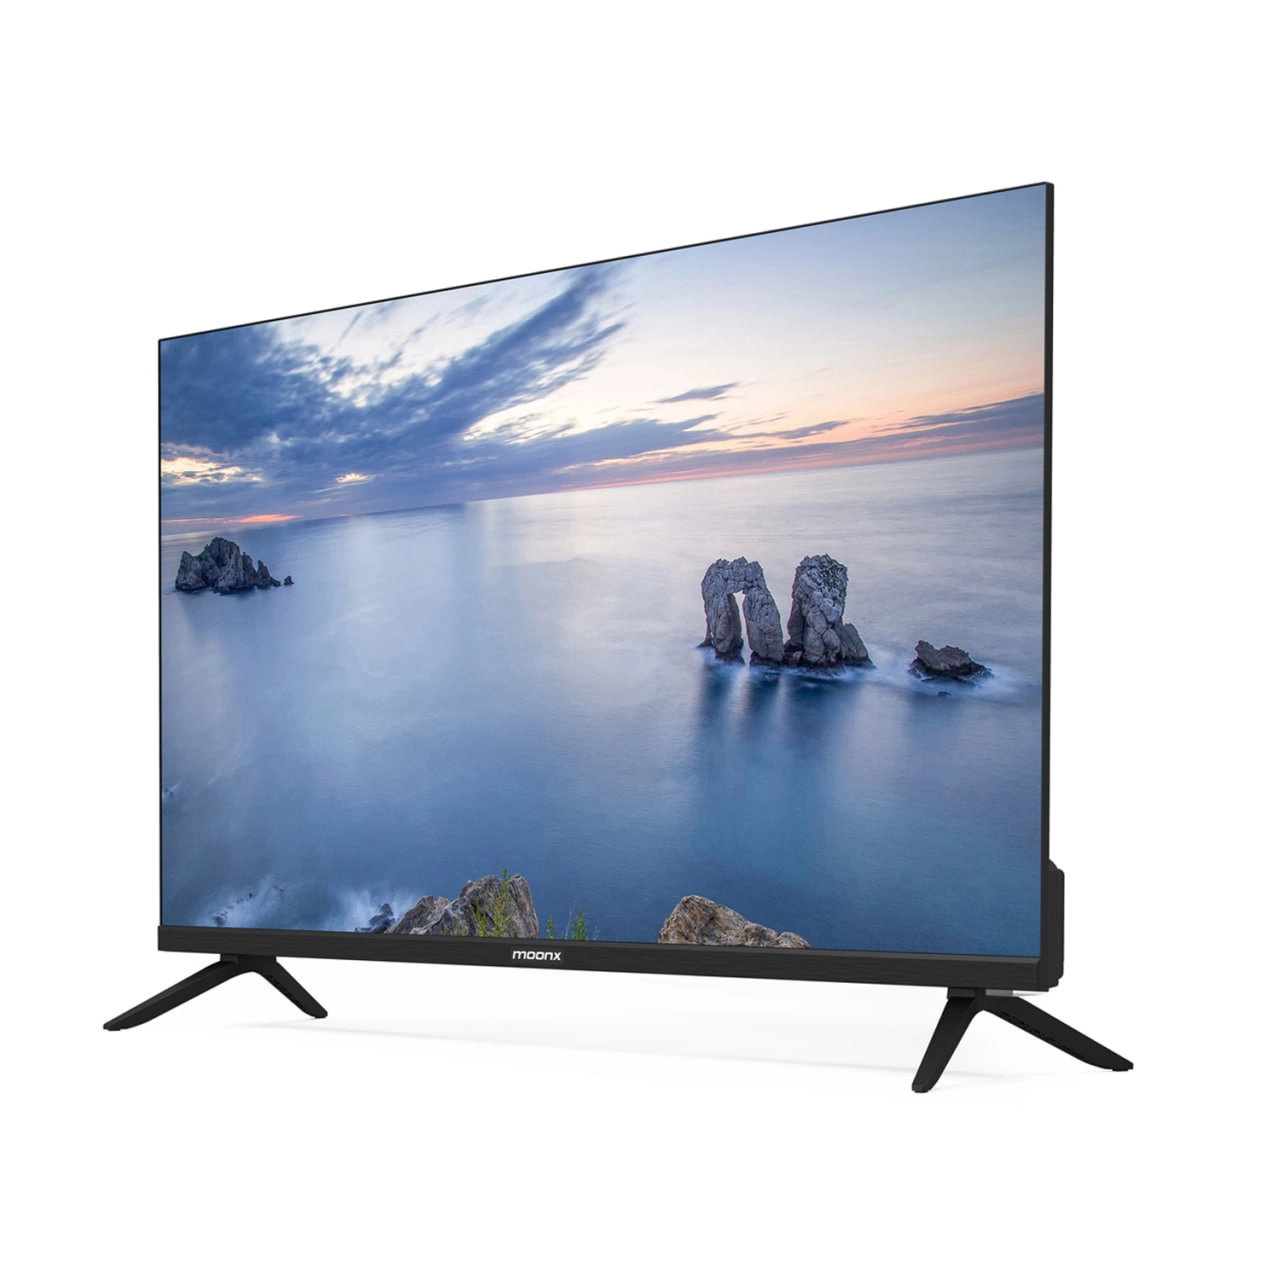 Телевизор Moonx 32AH700 Android TV недорого